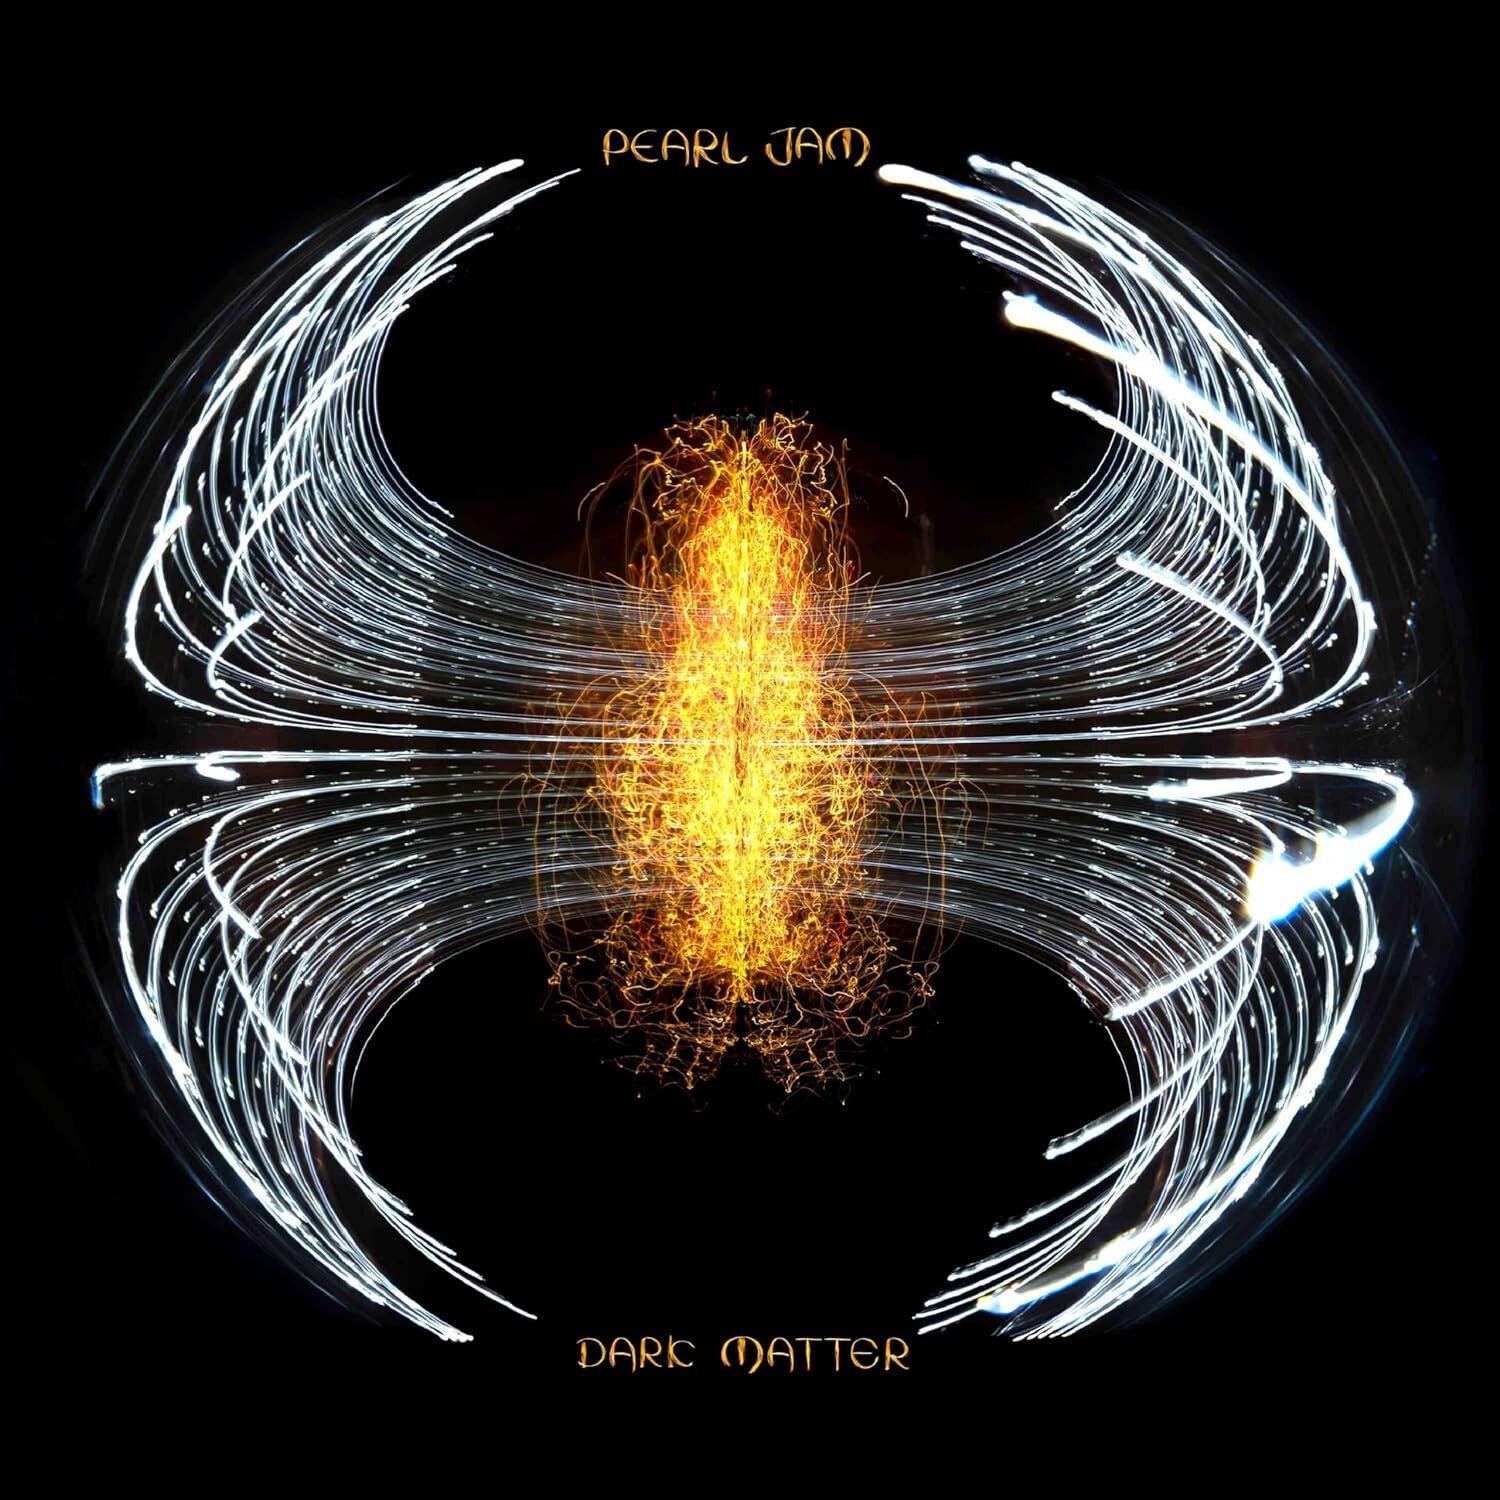 CD musique Pearl Jam - Dark Matter (CD)